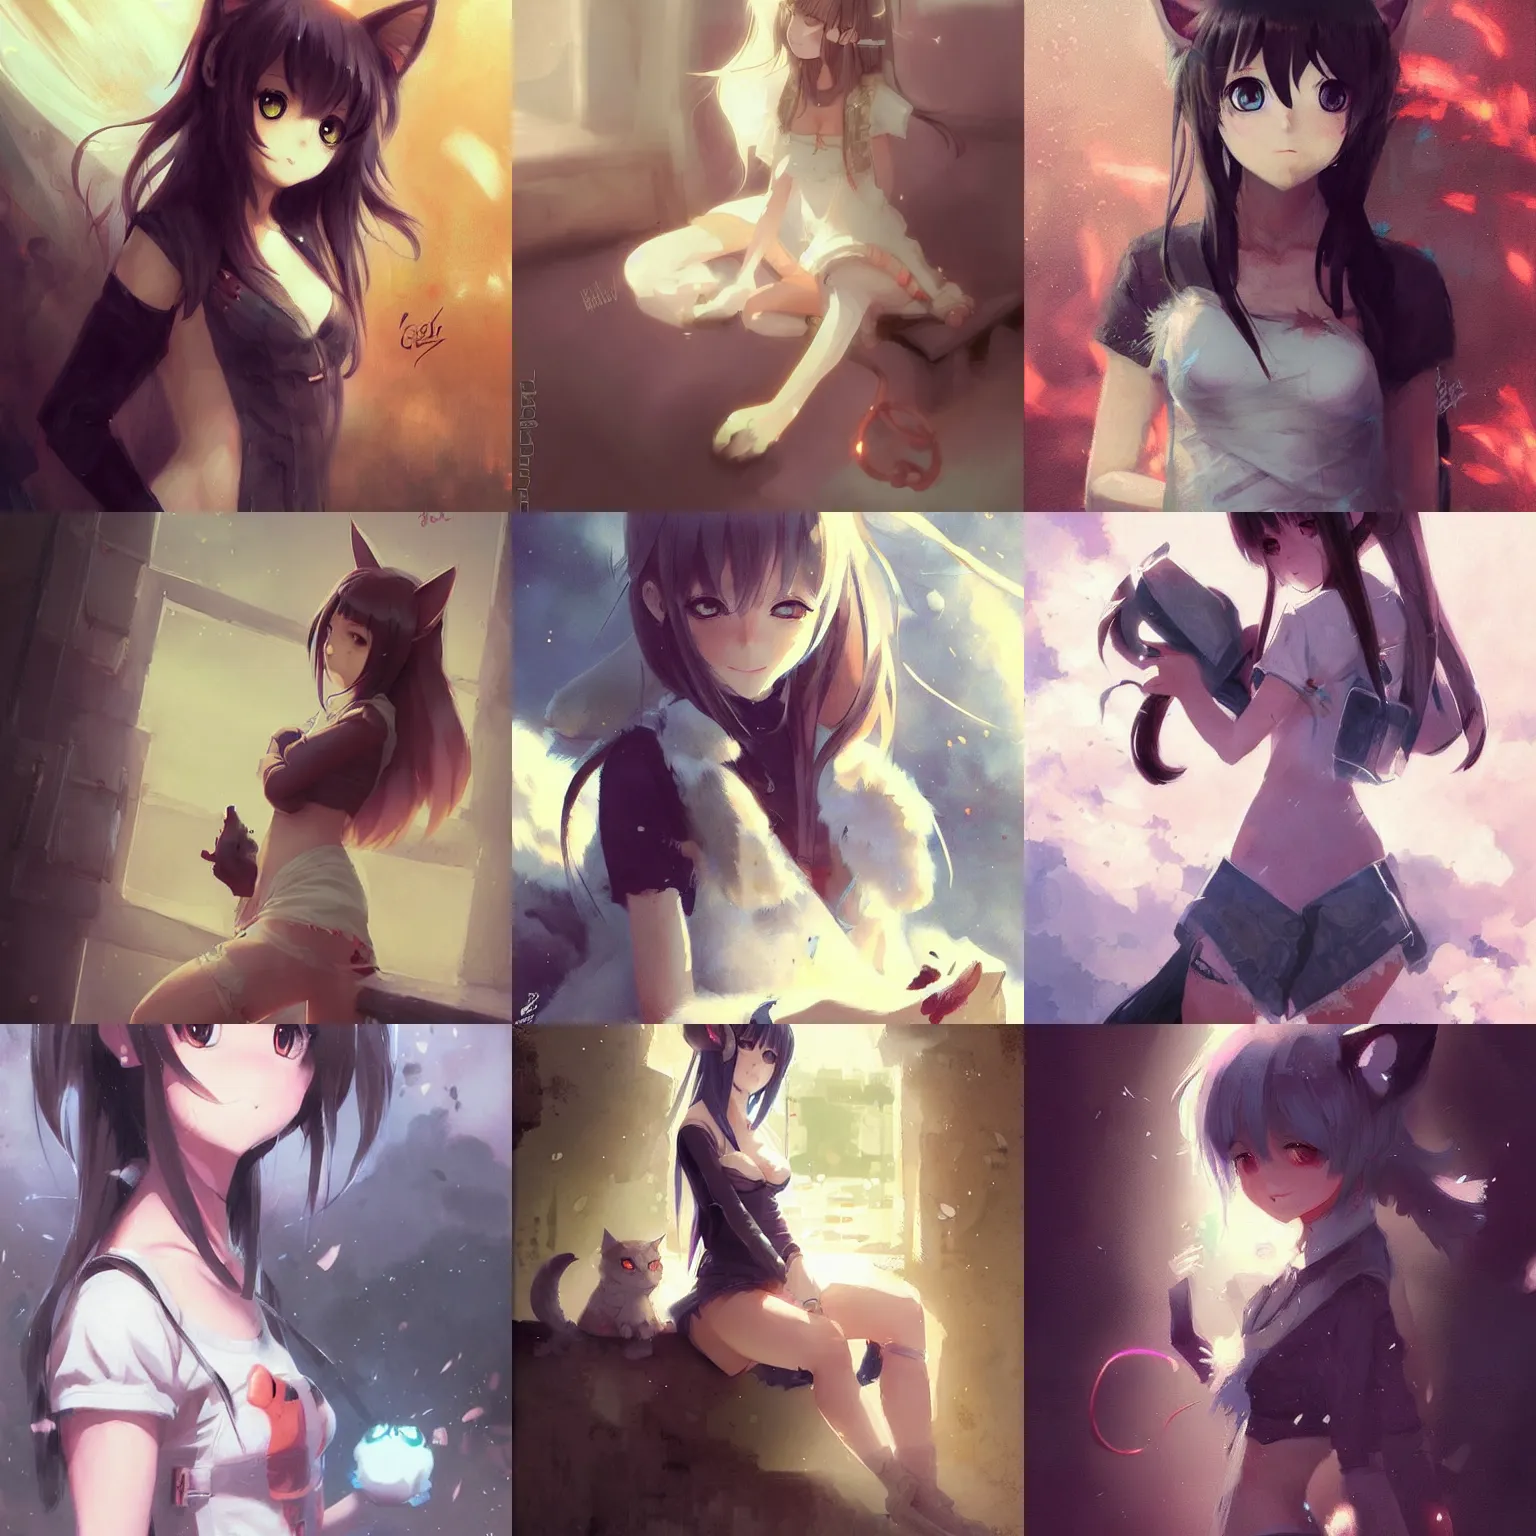 Prompt: cute anime catgirl by greg rutkowski